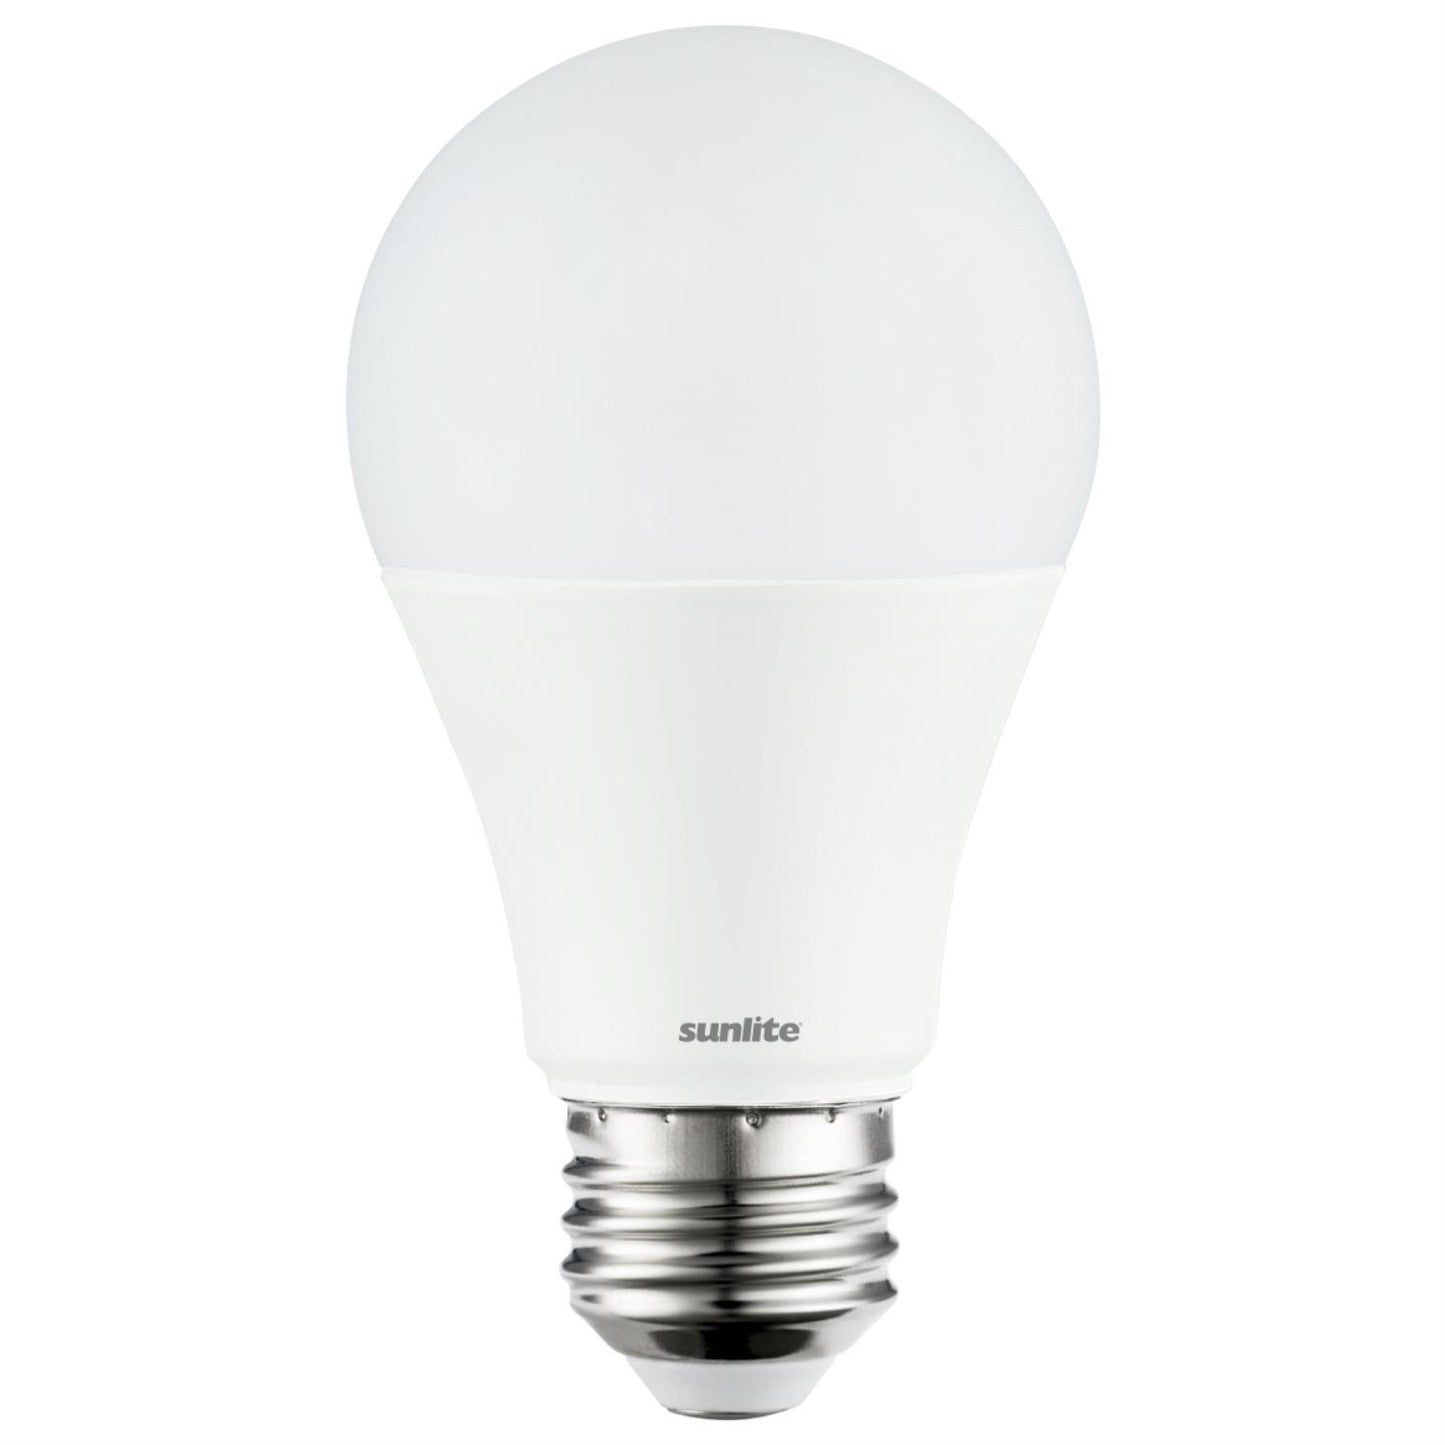 Sunlite A19 LED 12 Watt Dimmable Bulb 2700K Warm White Medium Base (E26)